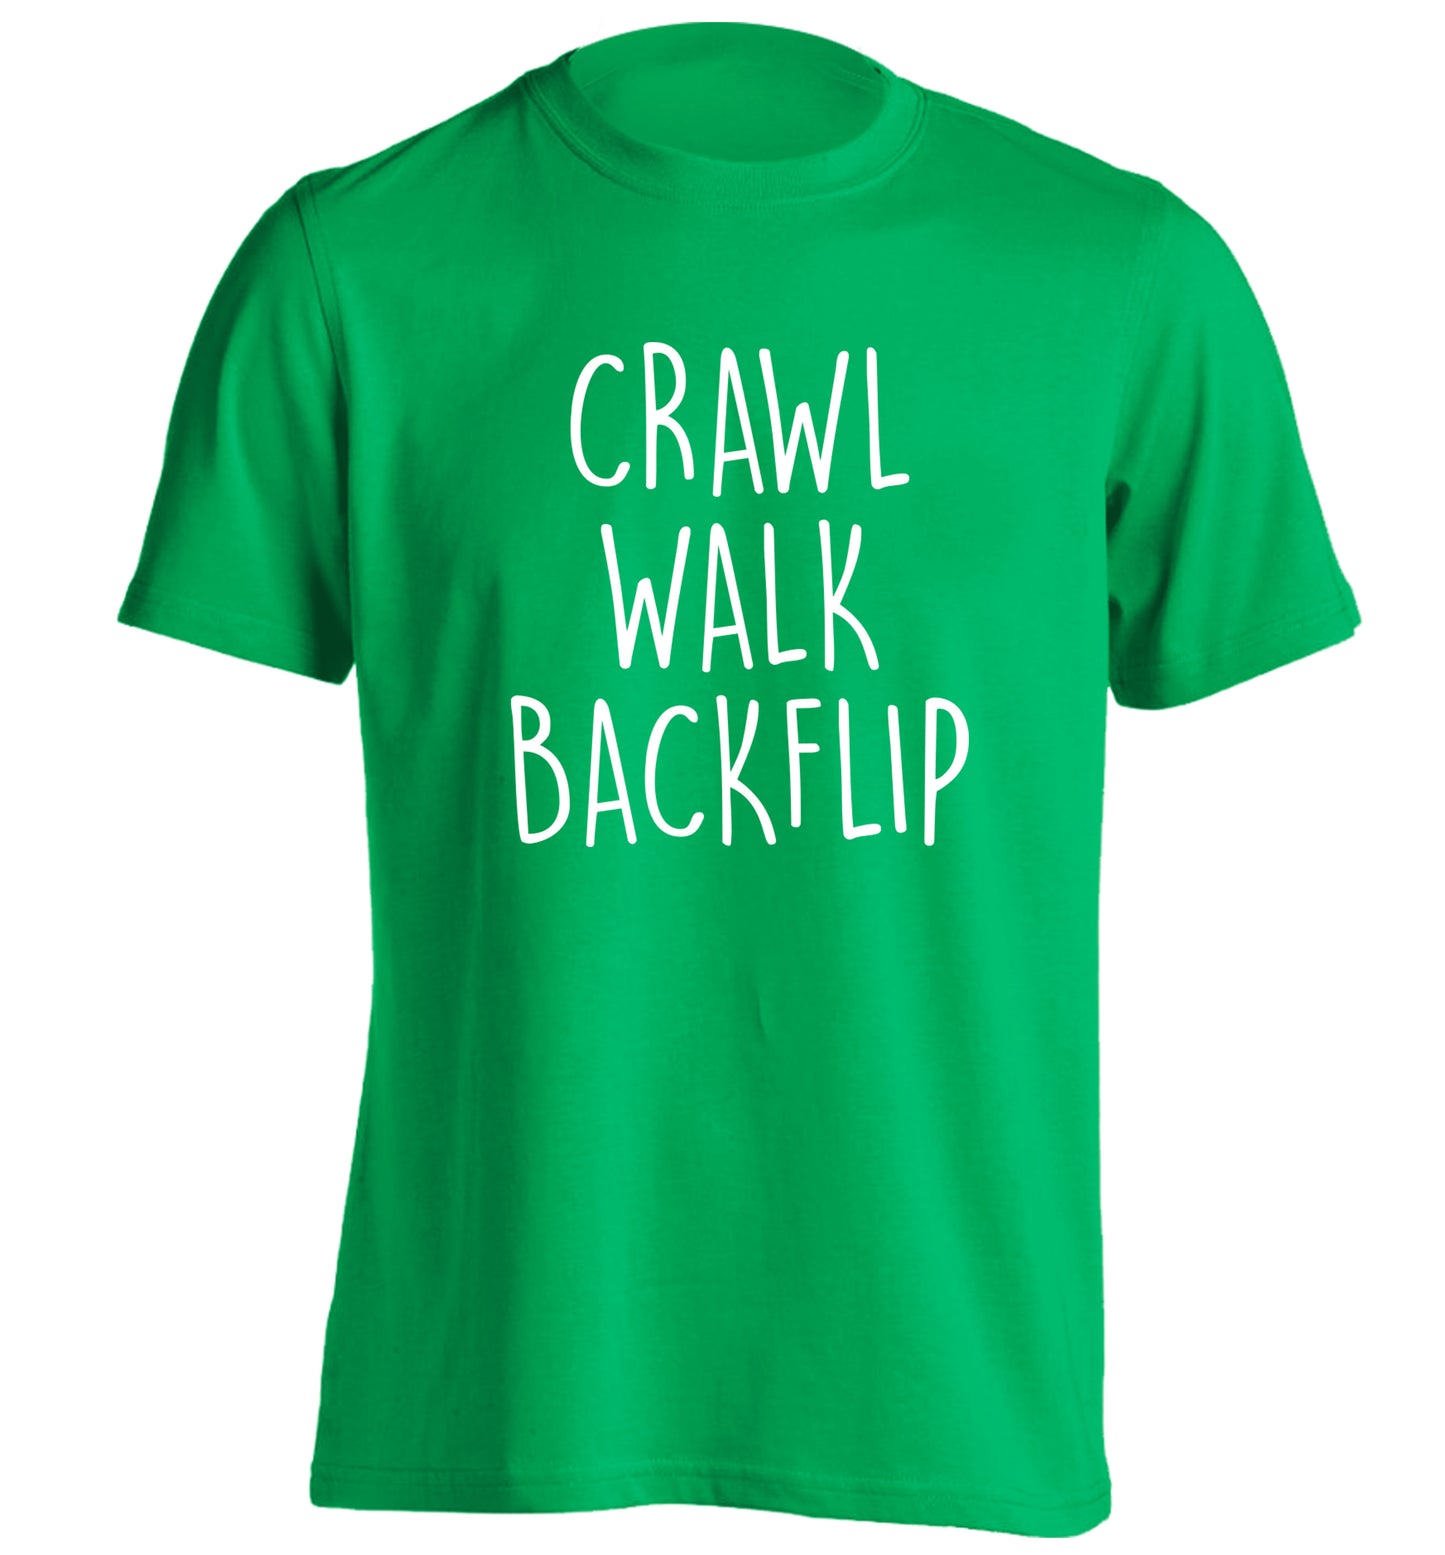 Crawl Walk Backflip adults unisex green Tshirt 2XL